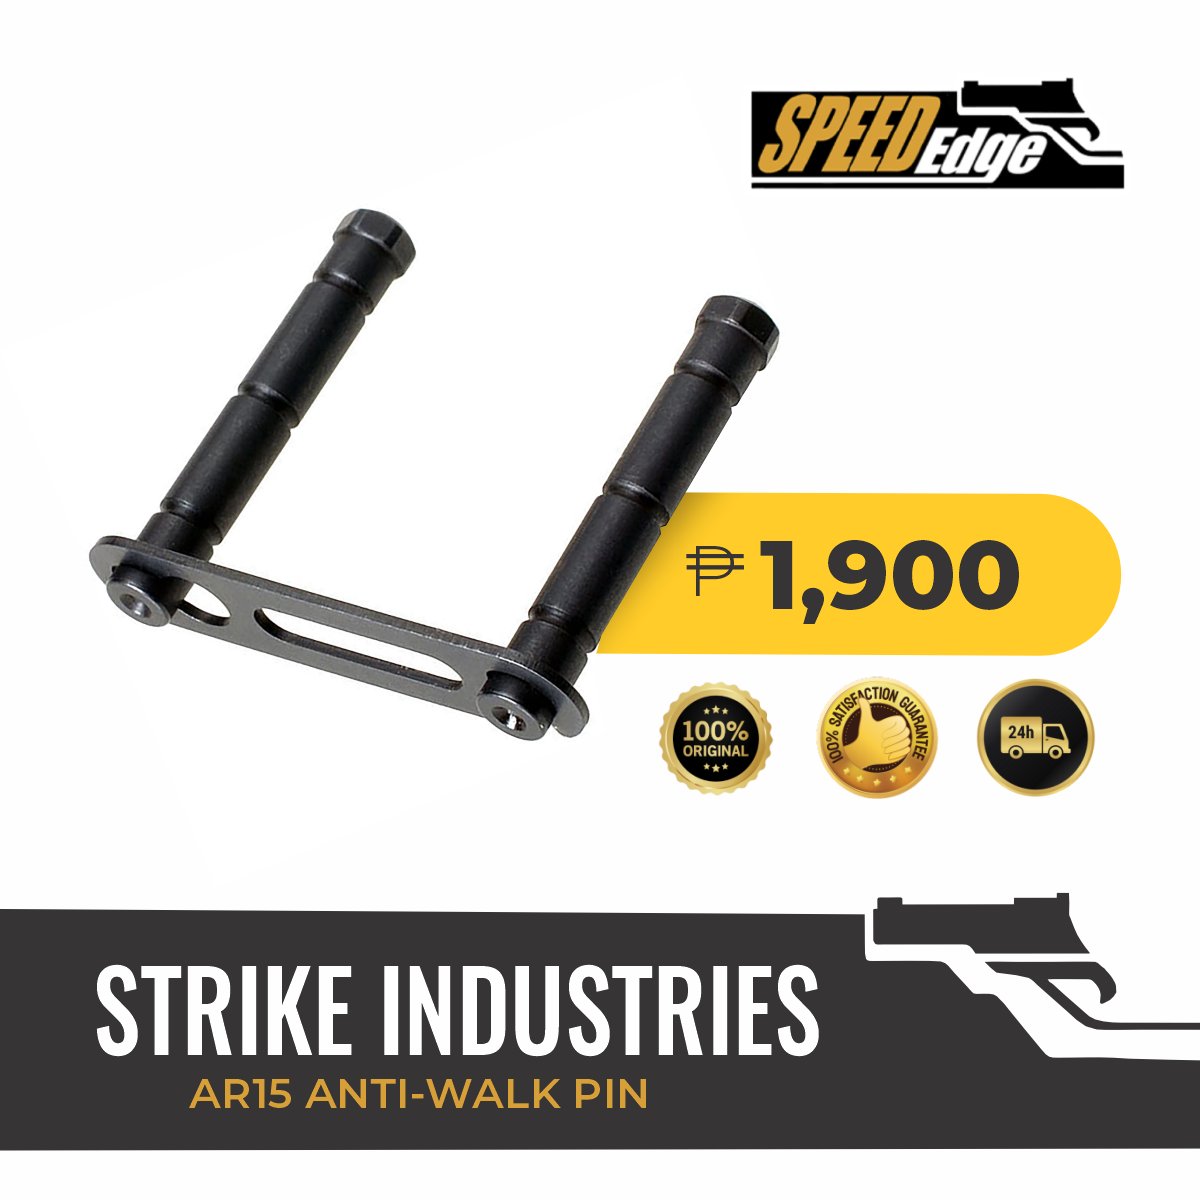 Strike Industries AR 15 Anti-Walk Pins